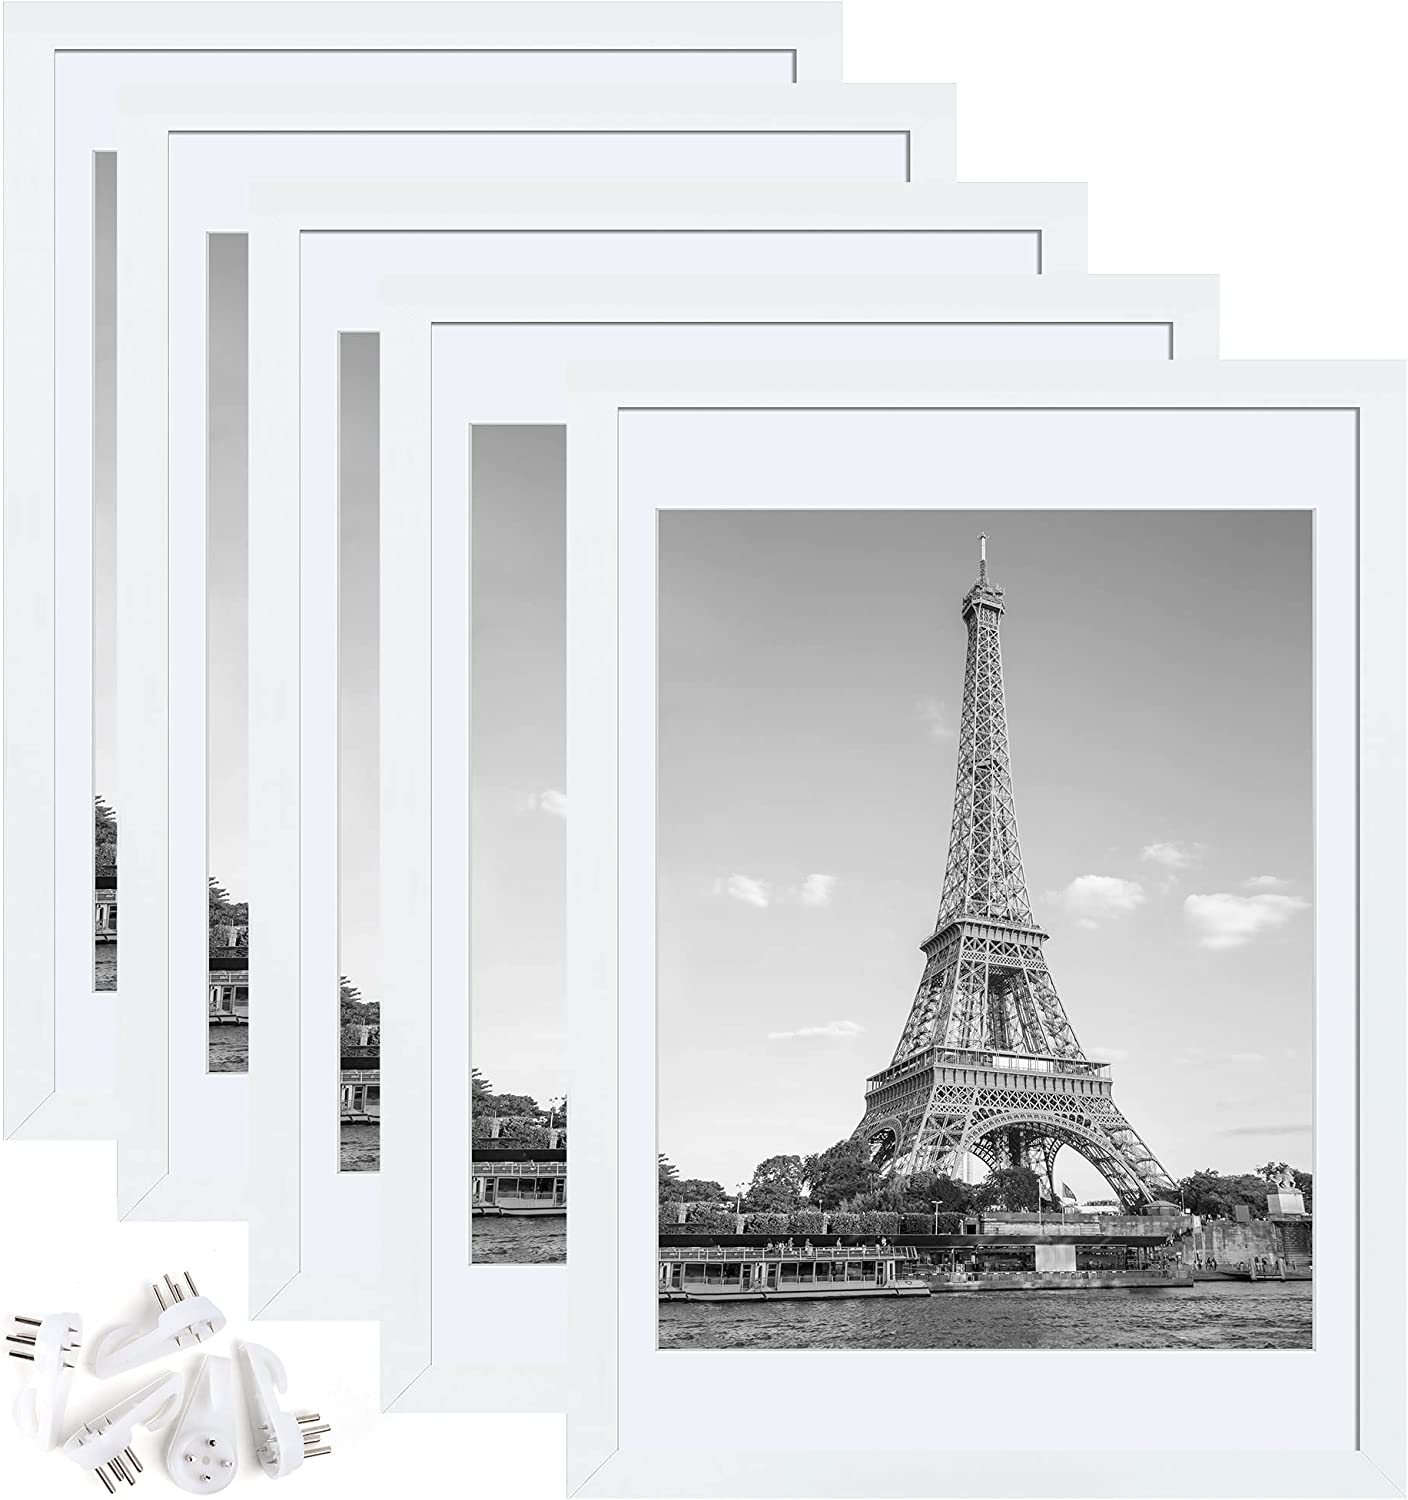 White Picture Frames & White Photo & Poster Frames